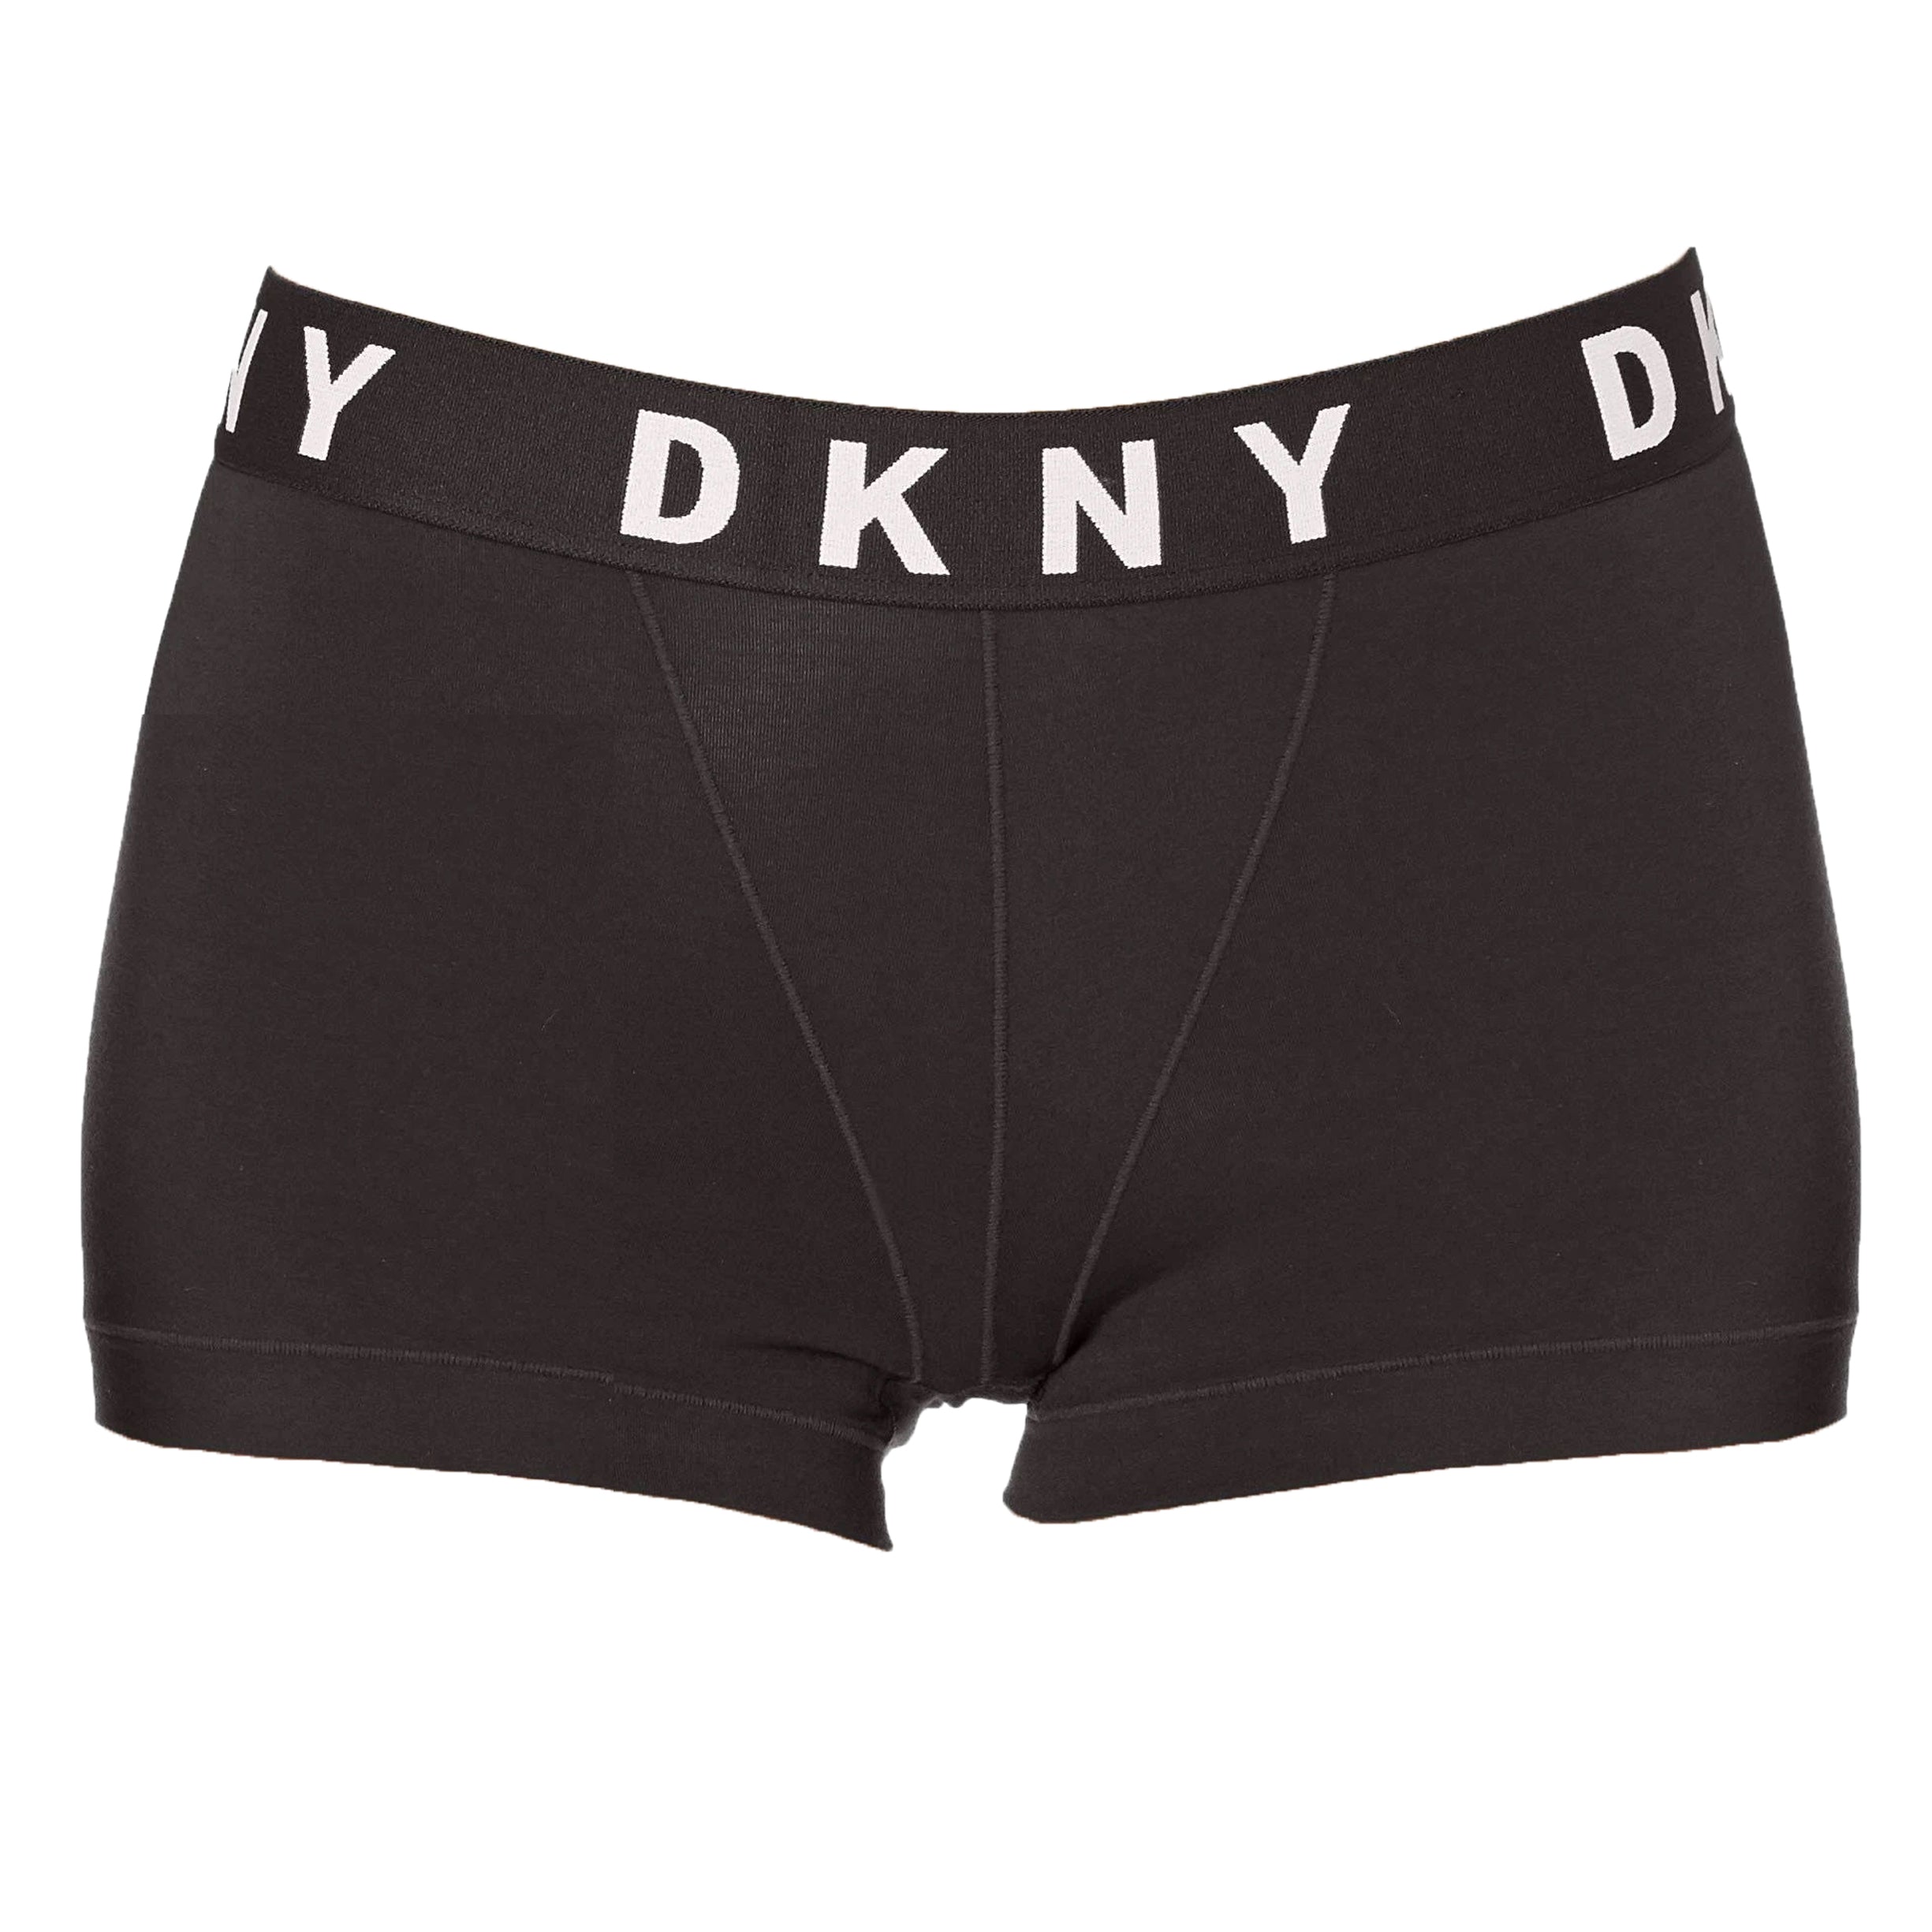 Underwear DKNY